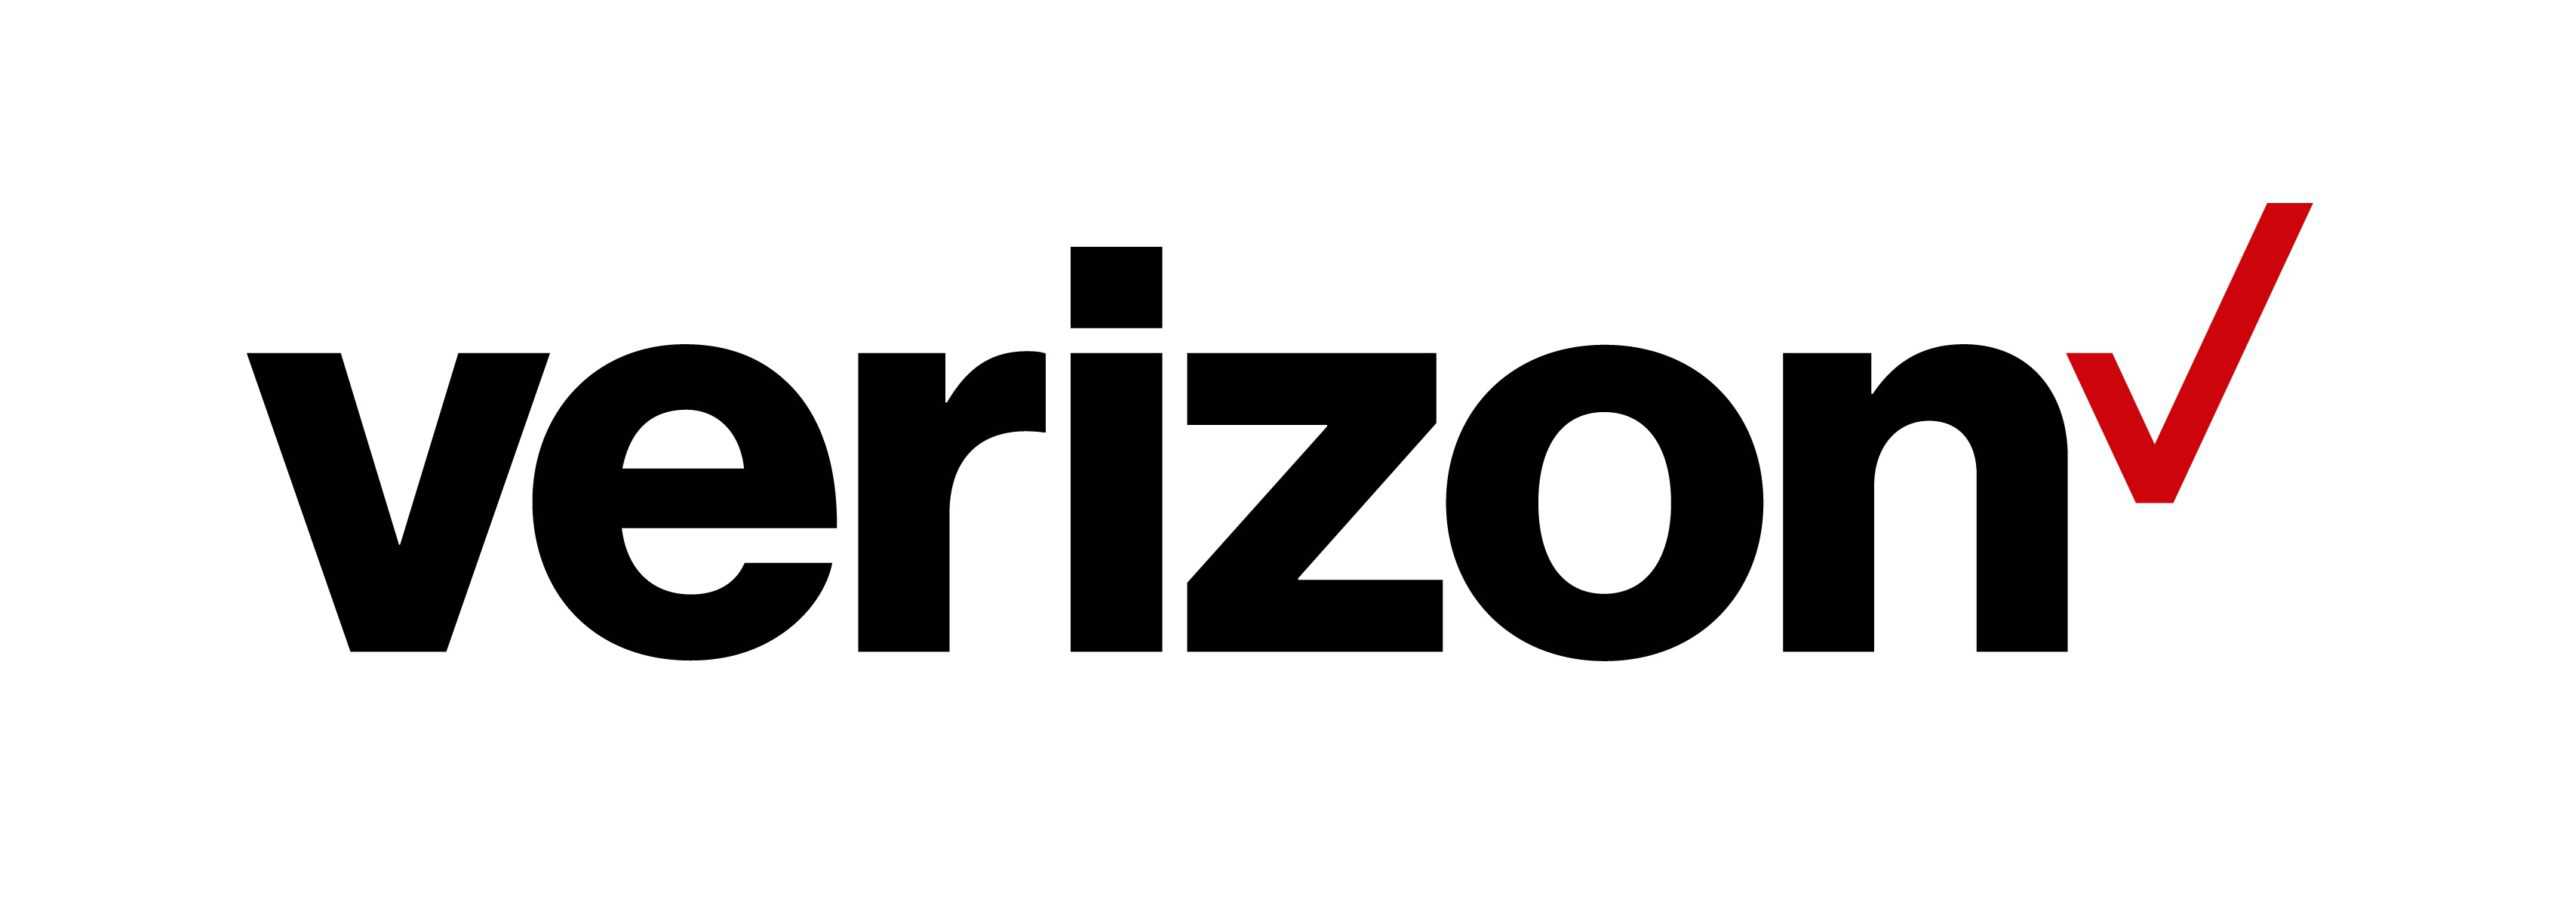 Verizon Primary logo.